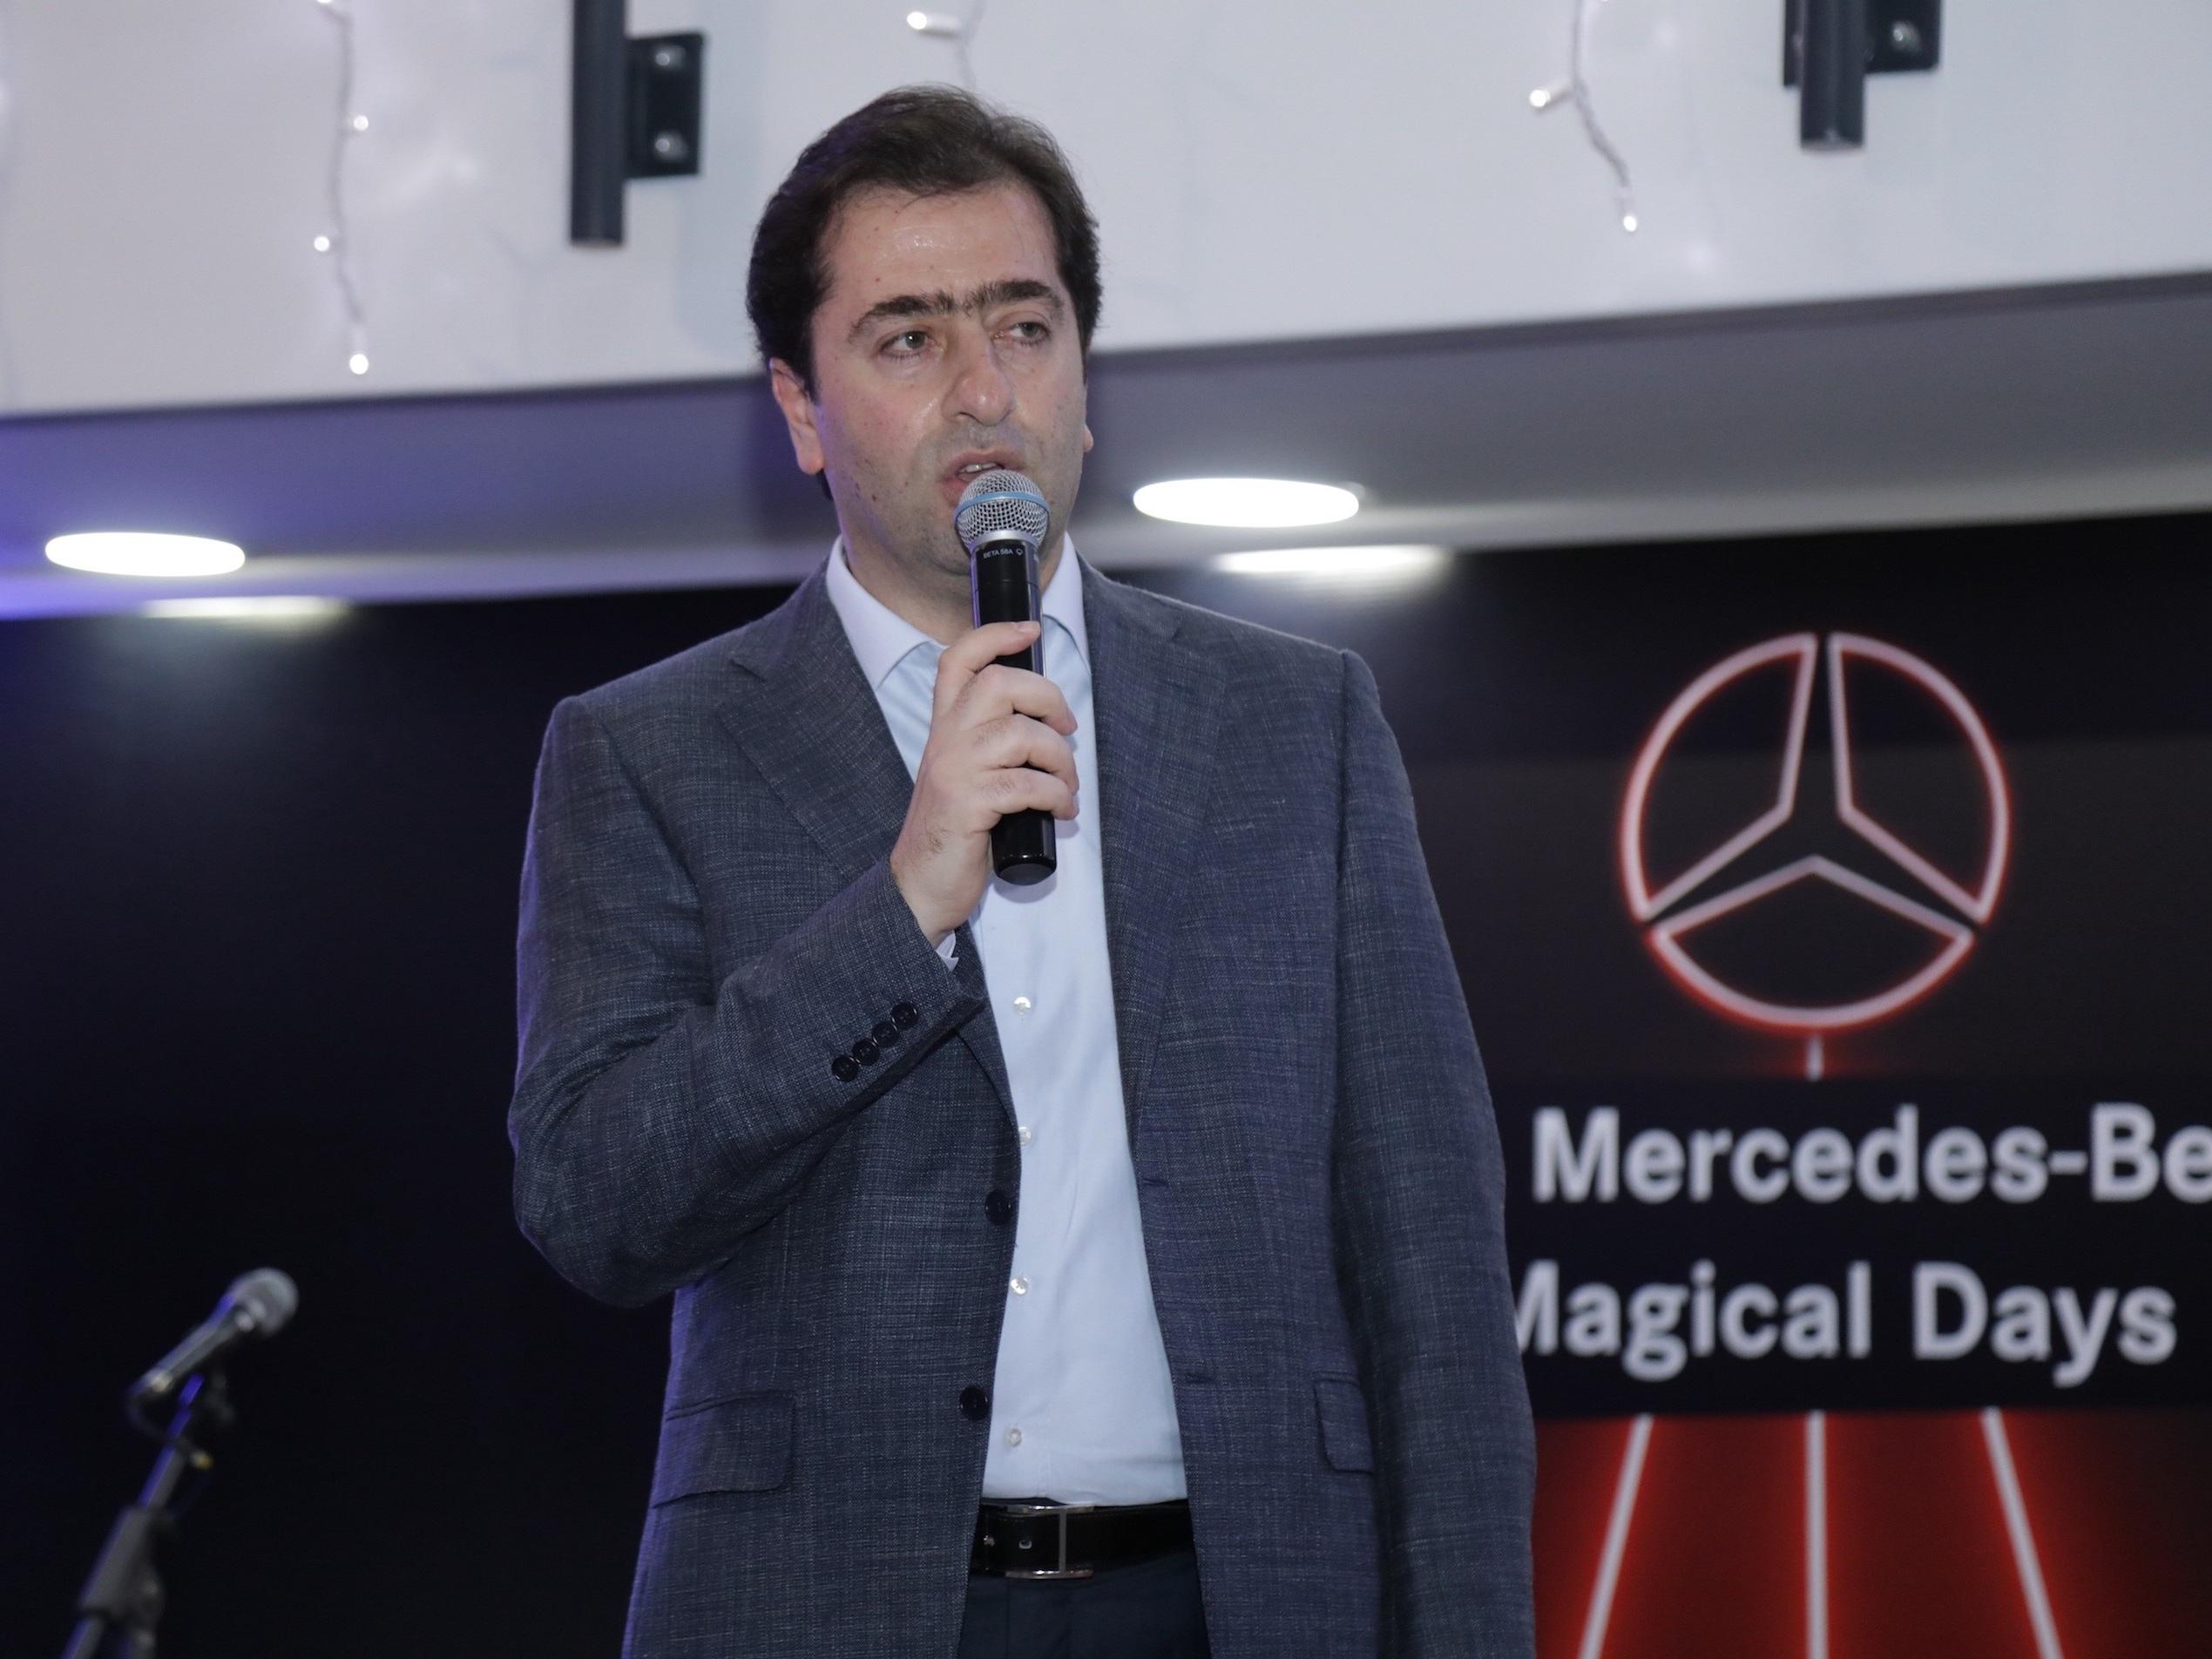 The Mercedes-Benz Magical Days, an enchanted event by T. Gargour & Fils